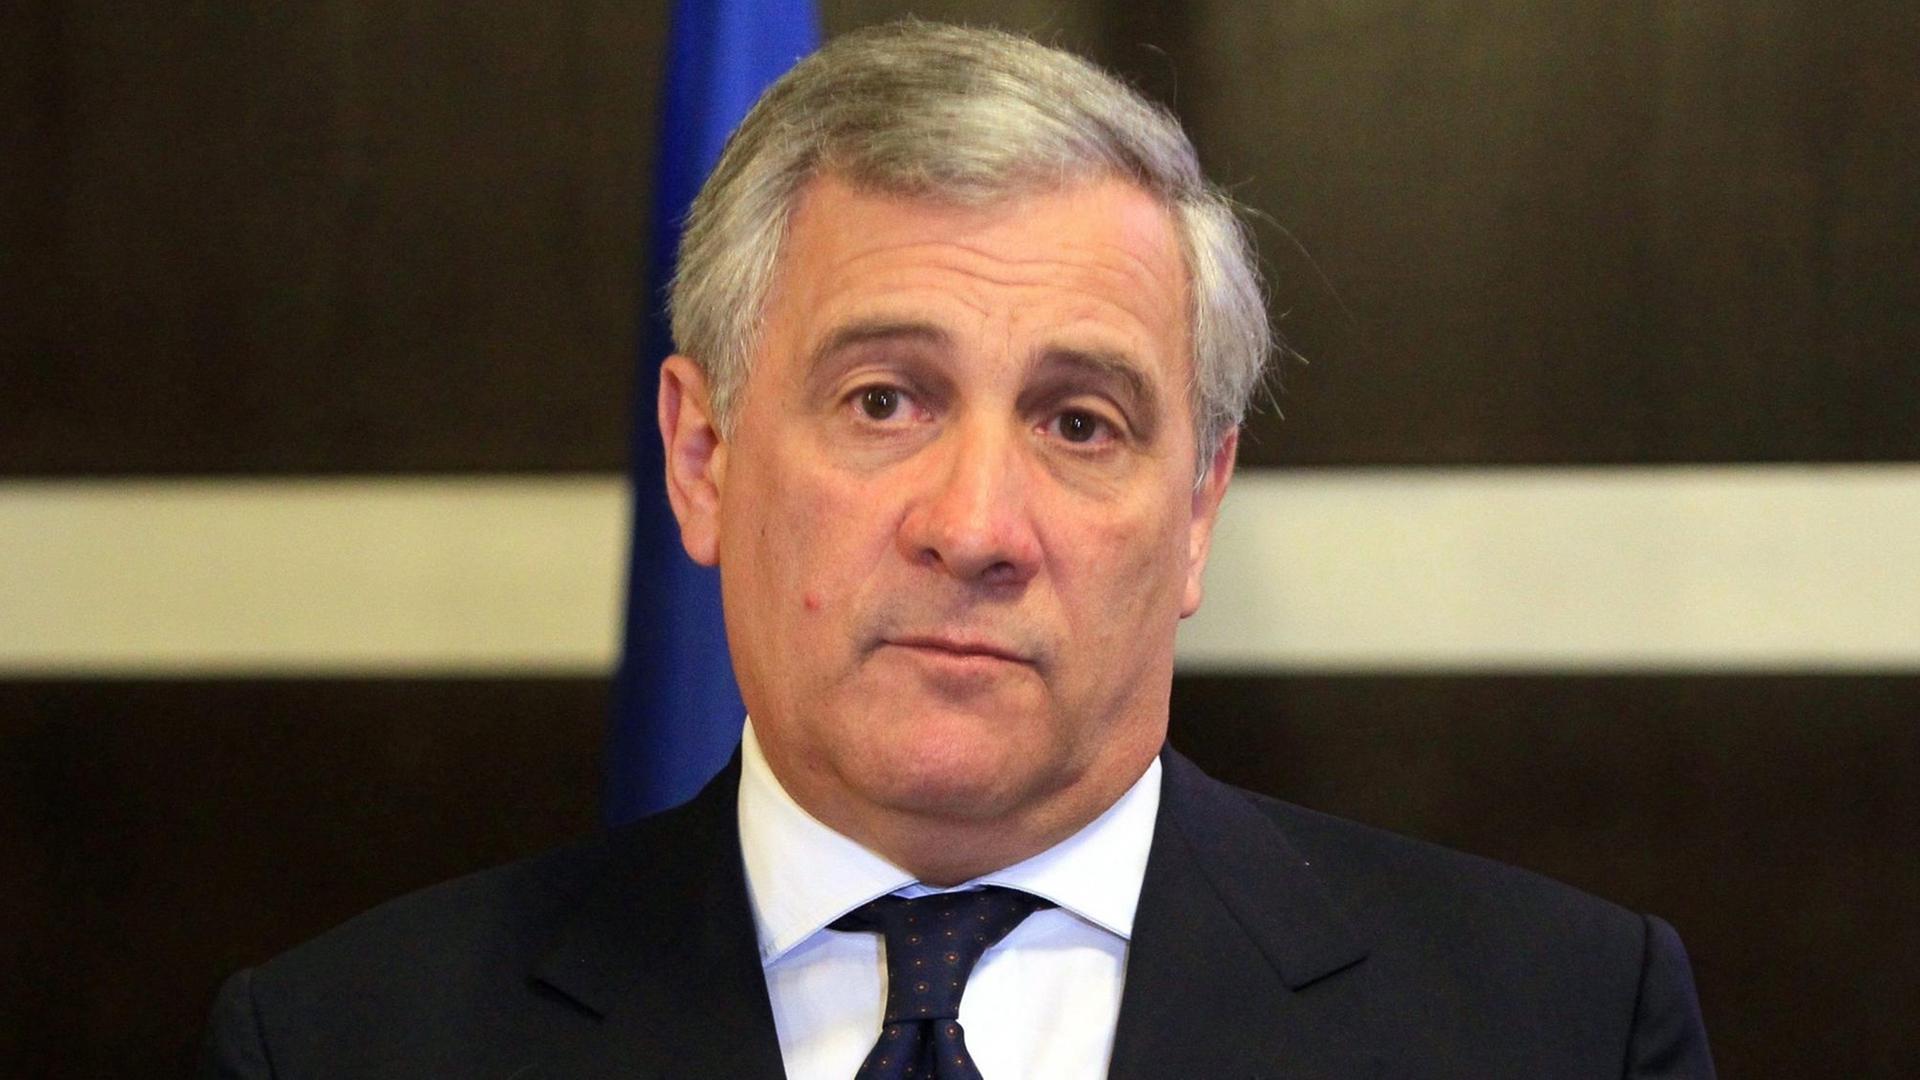 Antonio Tajani war bis 2014 EU-Industriekommissar - heute ist er Vizepräsident des EU-Parlaments